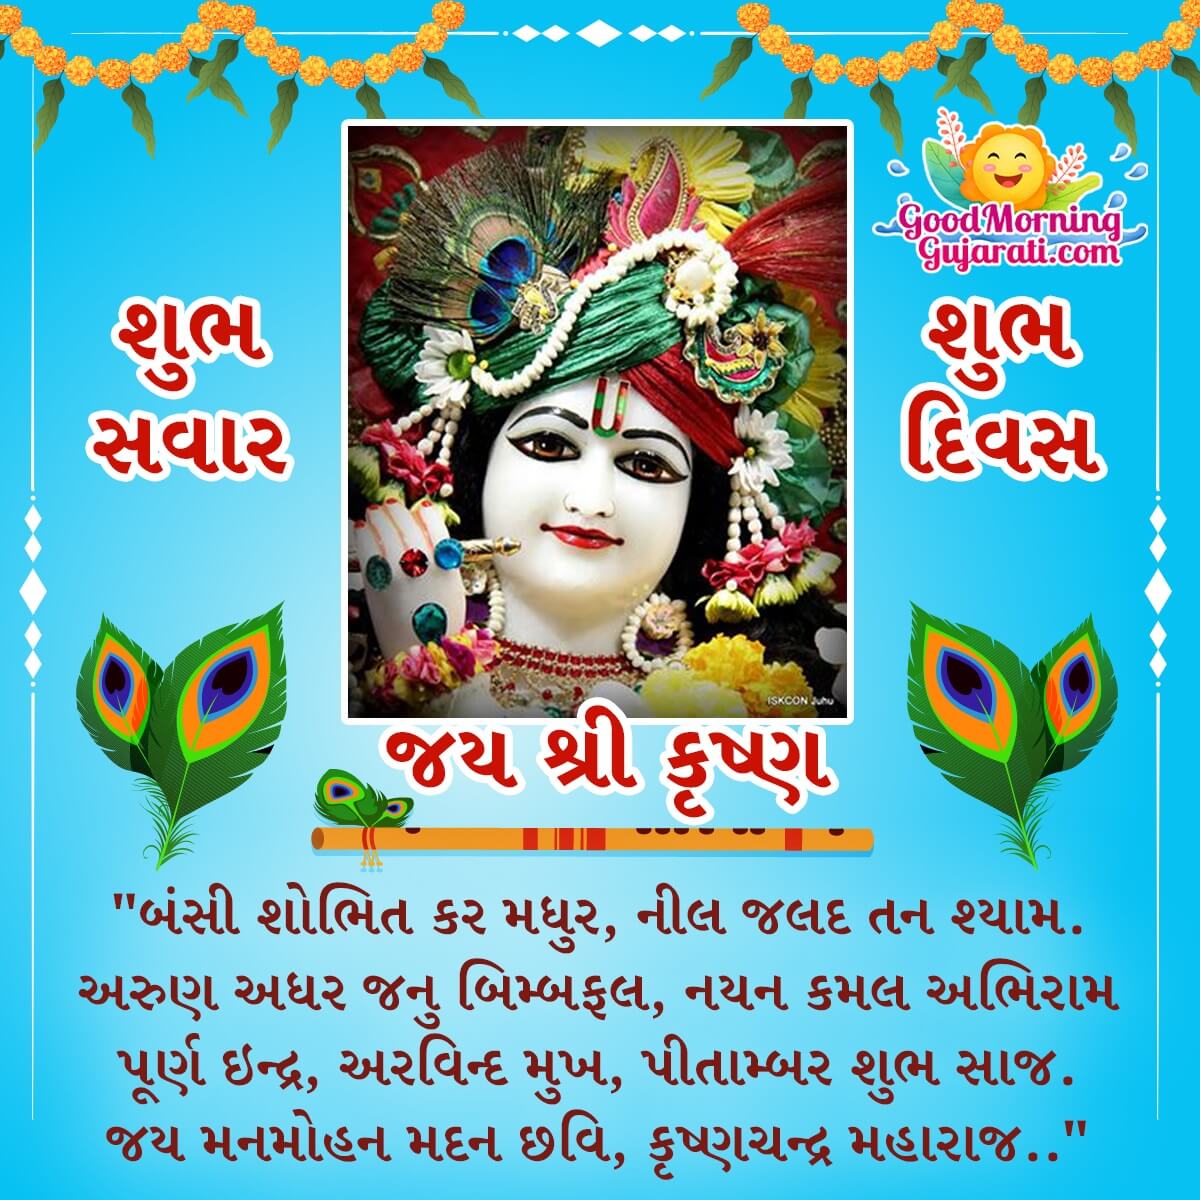 Good Morning Krishna Images In Gujarati